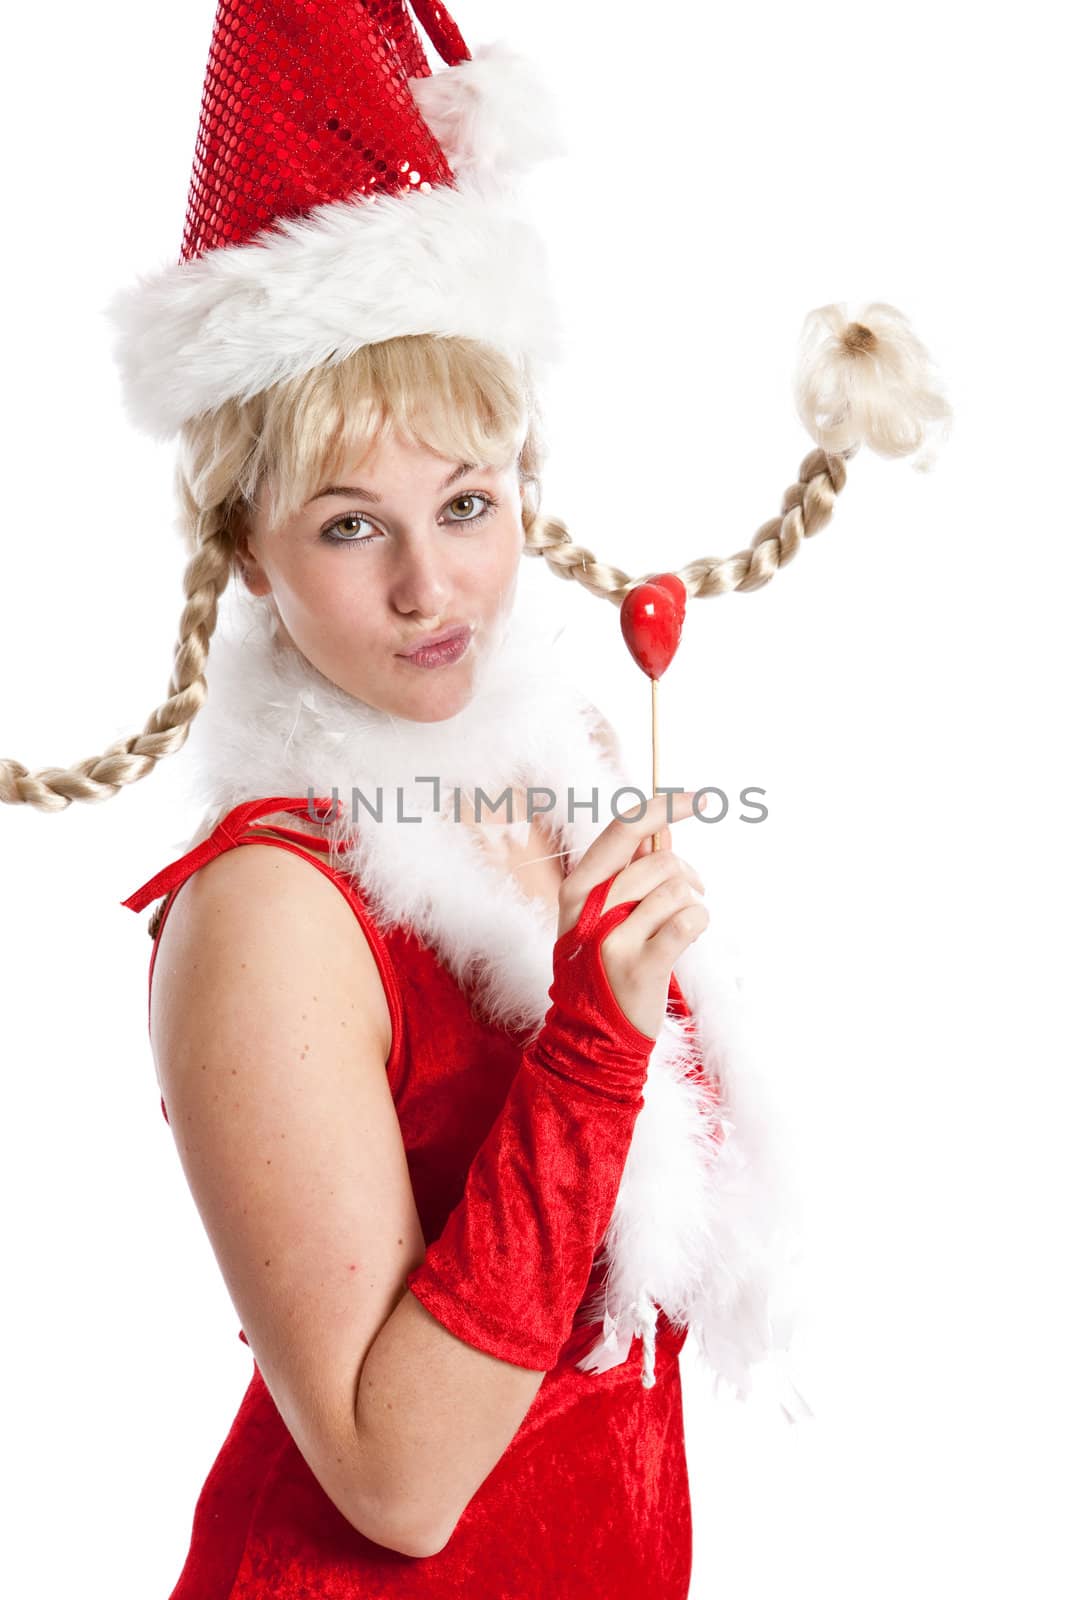 Cheeky christmas girl by Fotosmurf